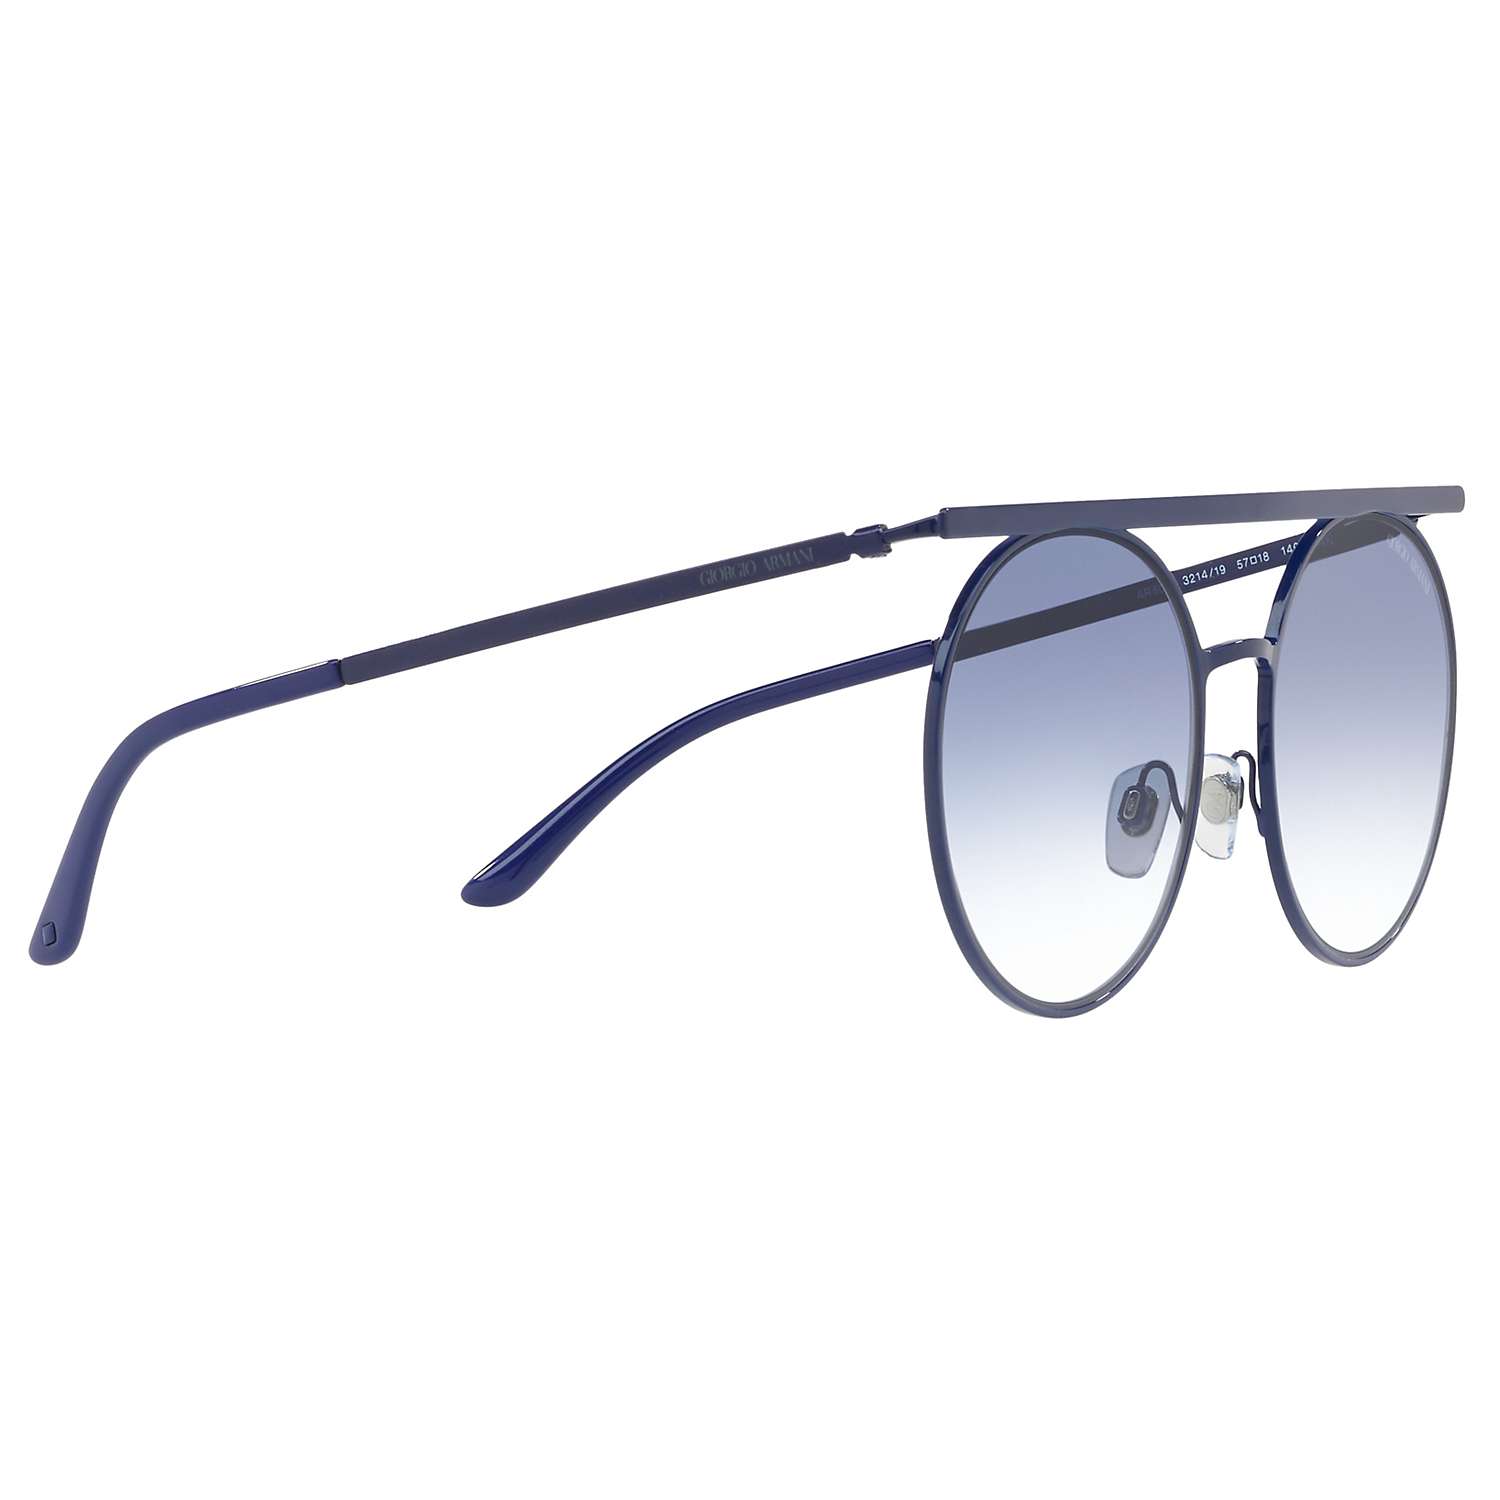 Buy Giorgio Armani AR6069 Round Sunglasses, Navy/Blue Gradient Online at johnlewis.com